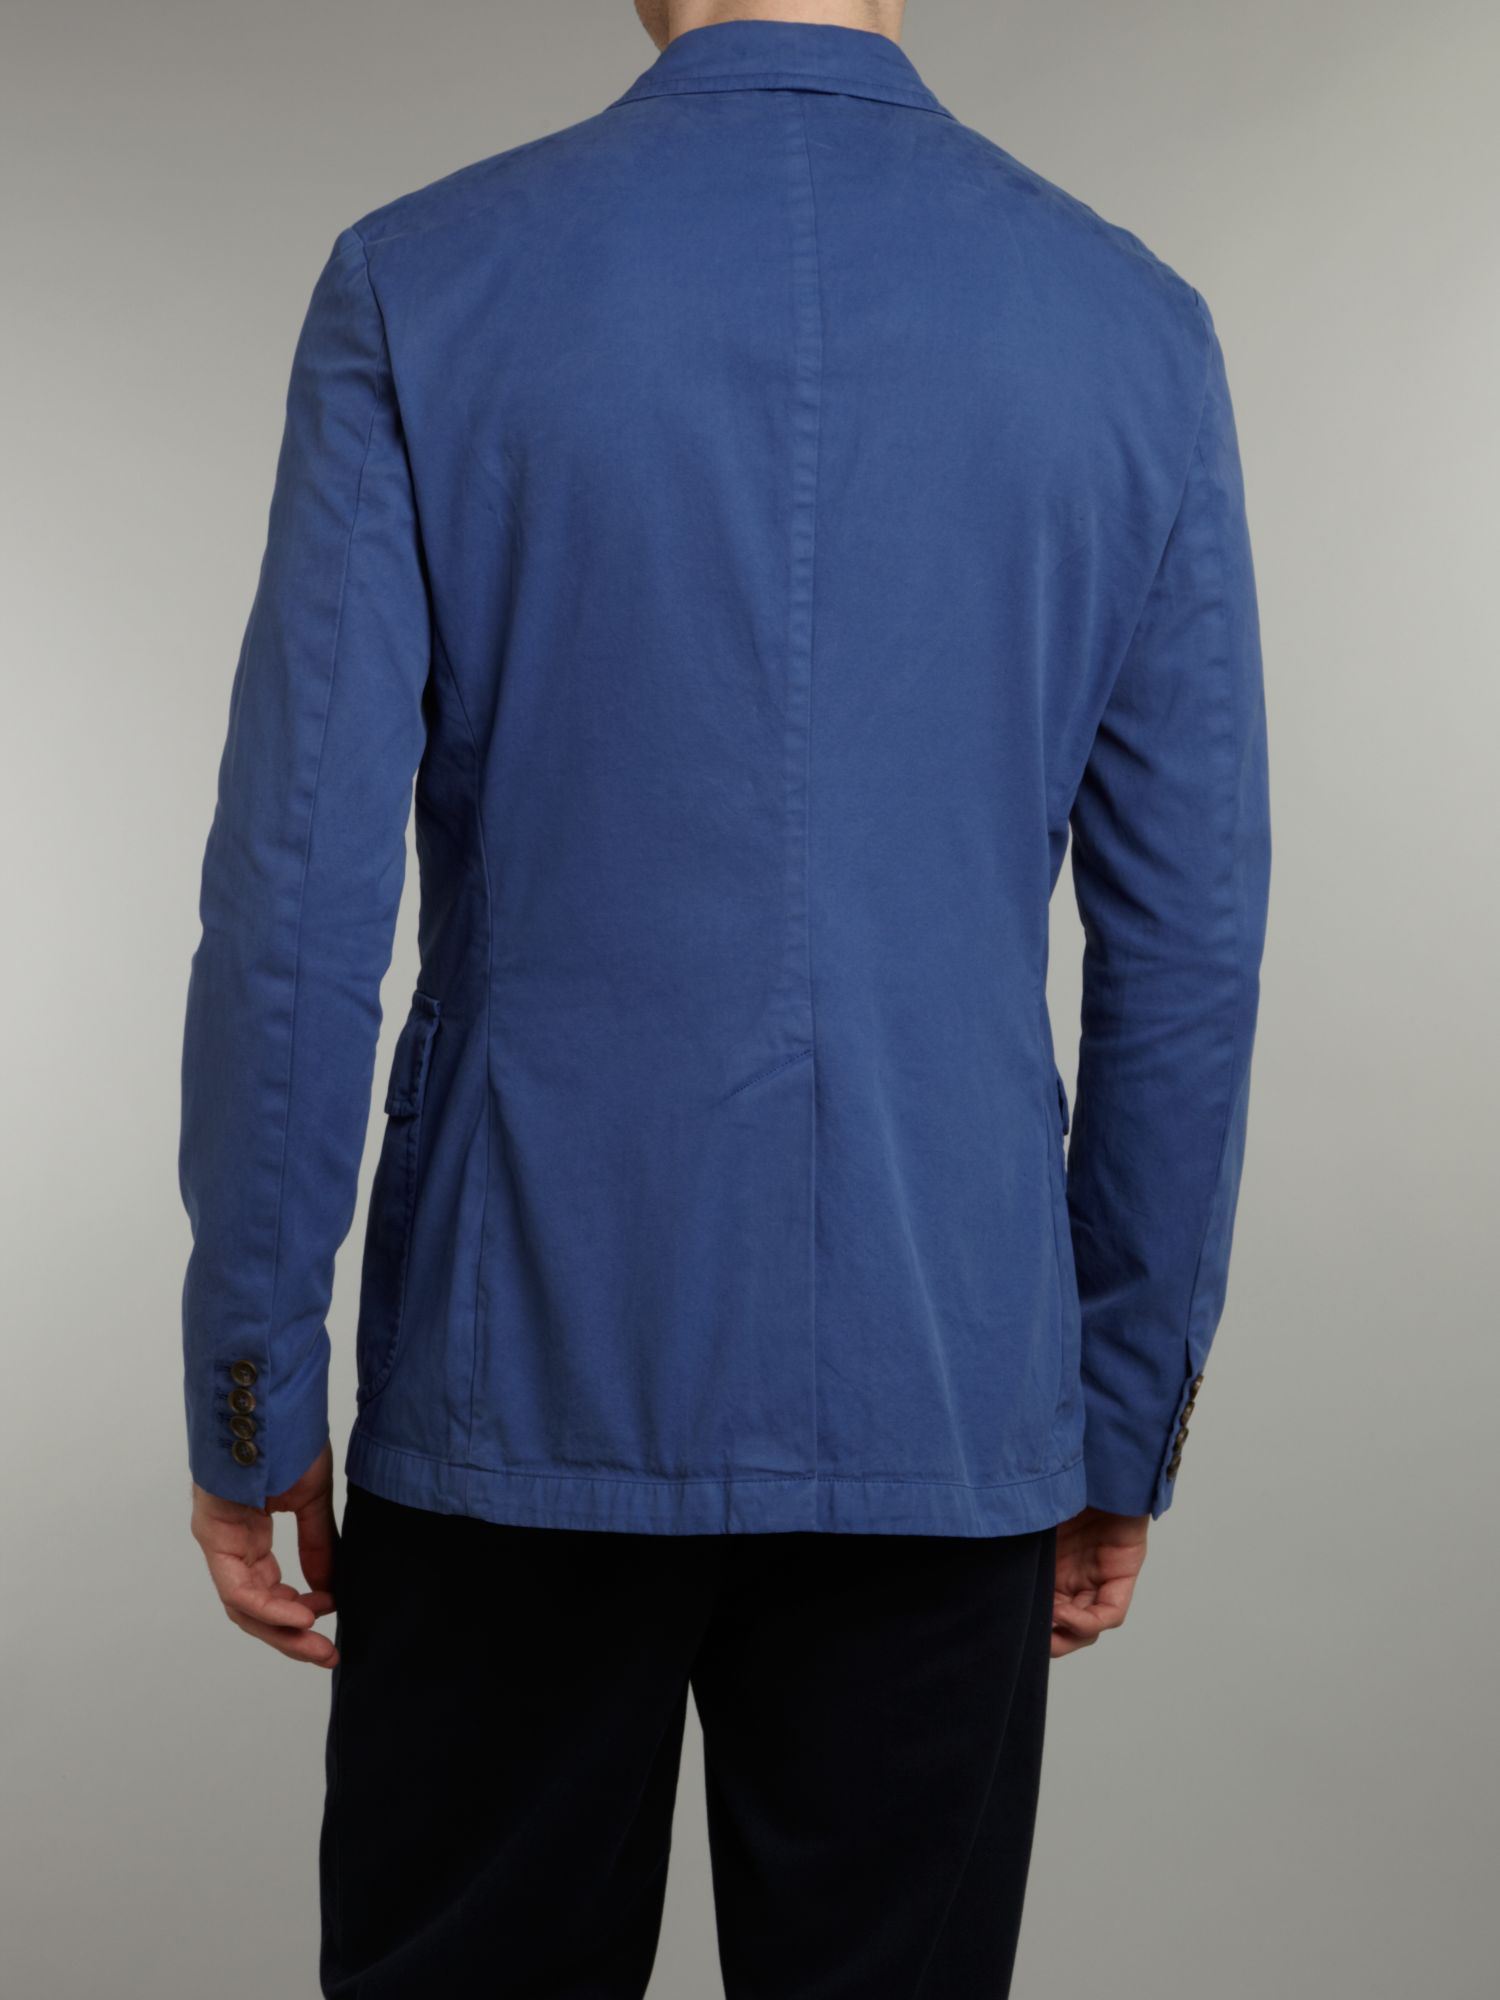 Polo ralph lauren Langley Sports Coat in Blue for Men | Lyst